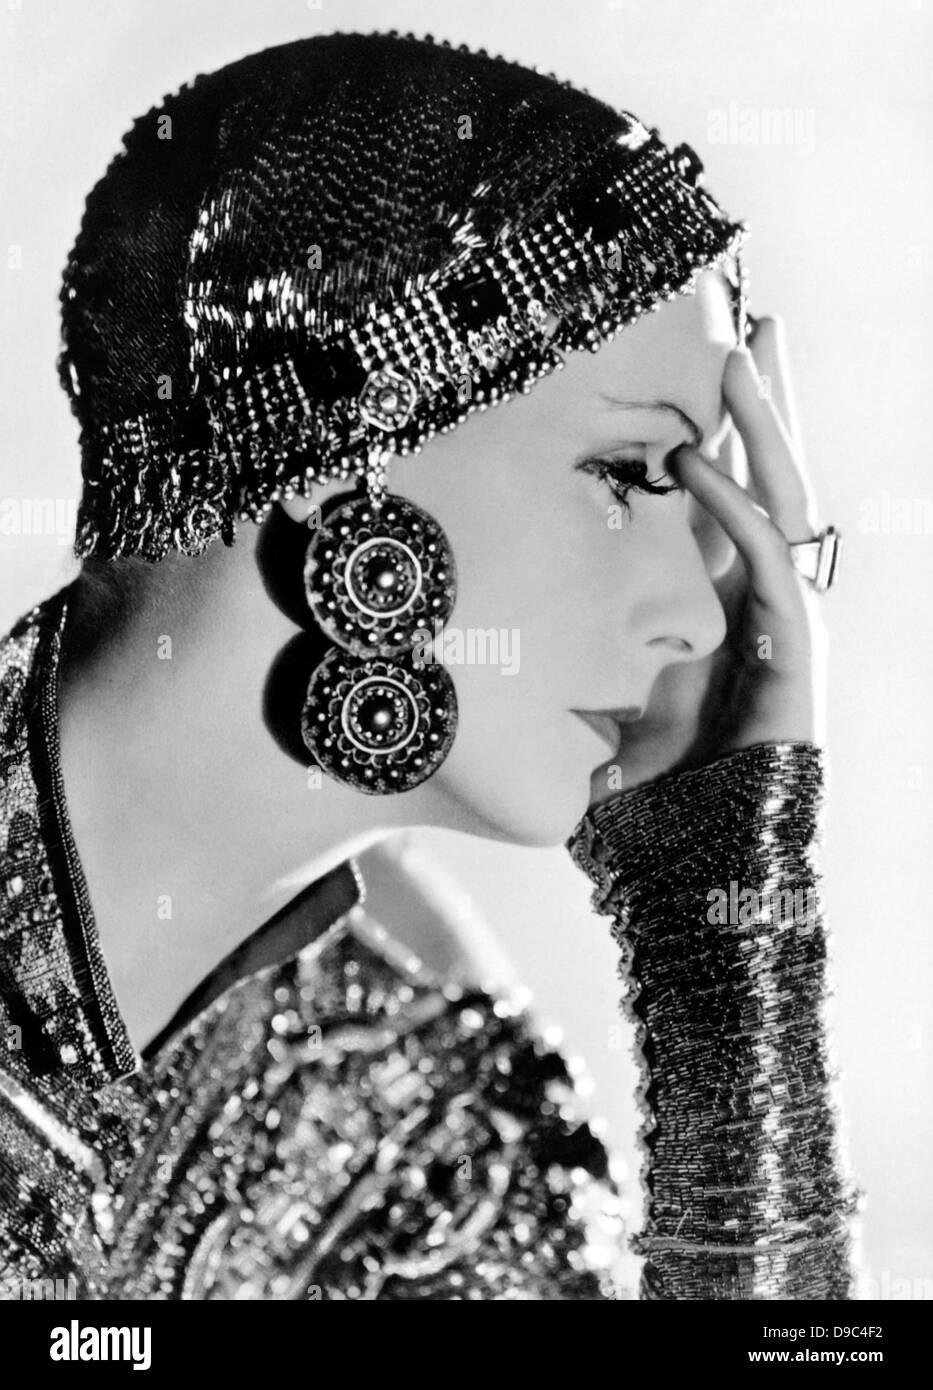 Greta Garbo 1905 1990 Swedish Film Actress About 1935 Stock Photo Alamy